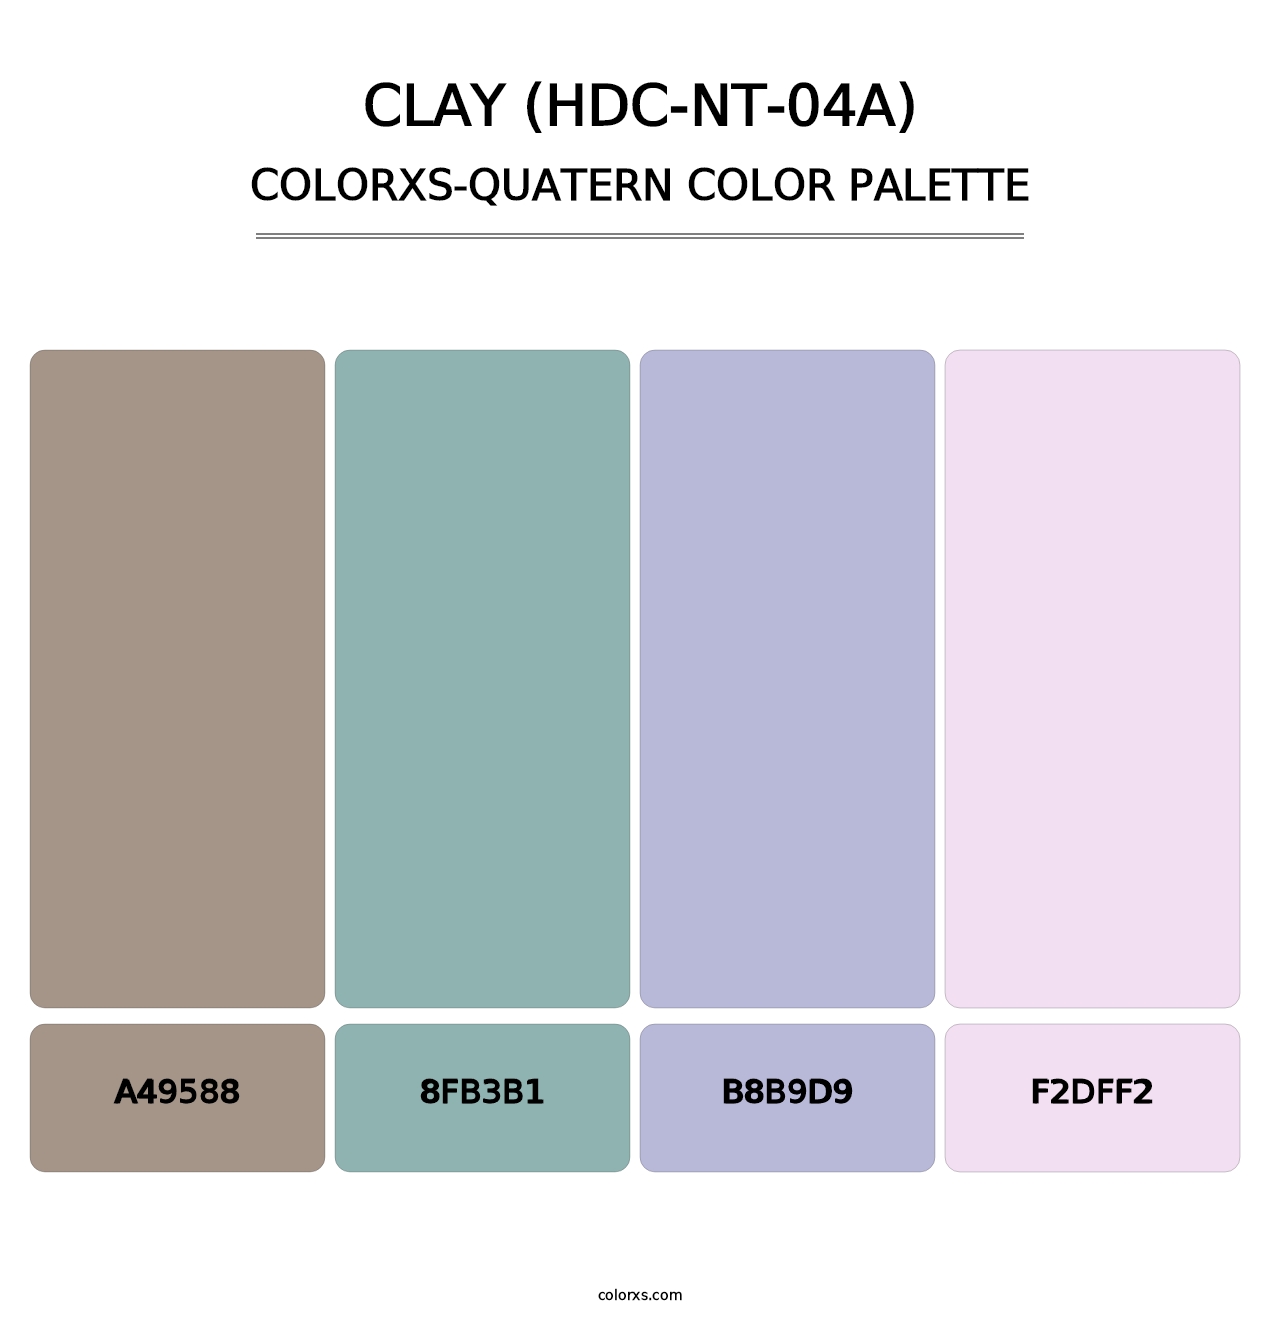 Clay (HDC-NT-04A) - Colorxs Quatern Palette